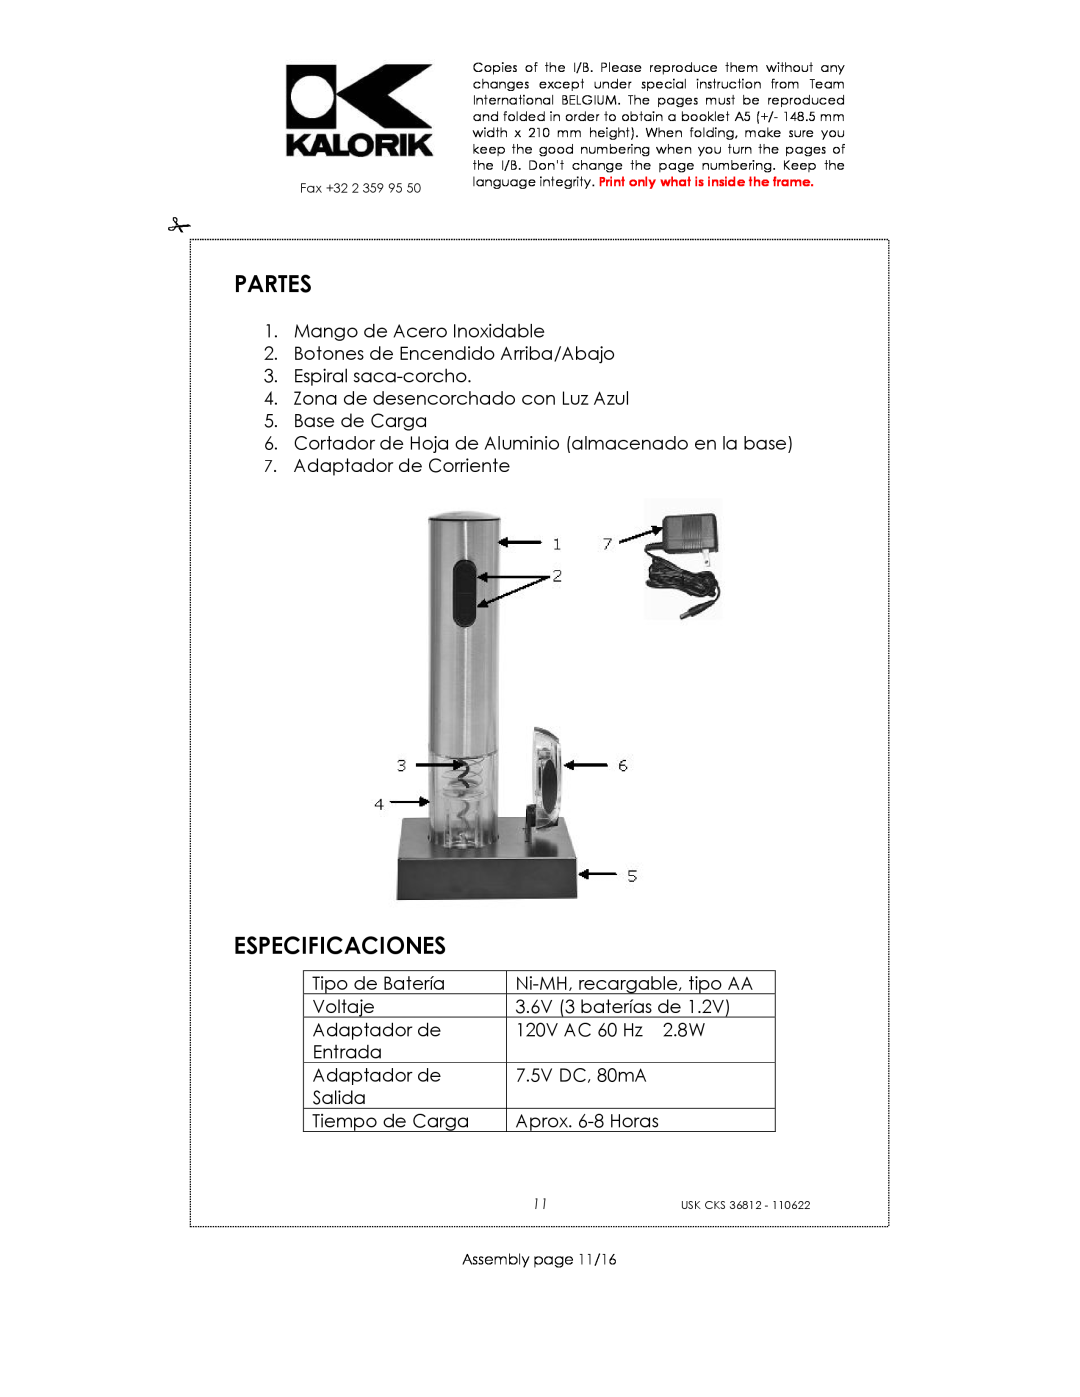 Kalorik USK CKS 36812 manual Partes, Especificaciones, Assembly page 11/16 